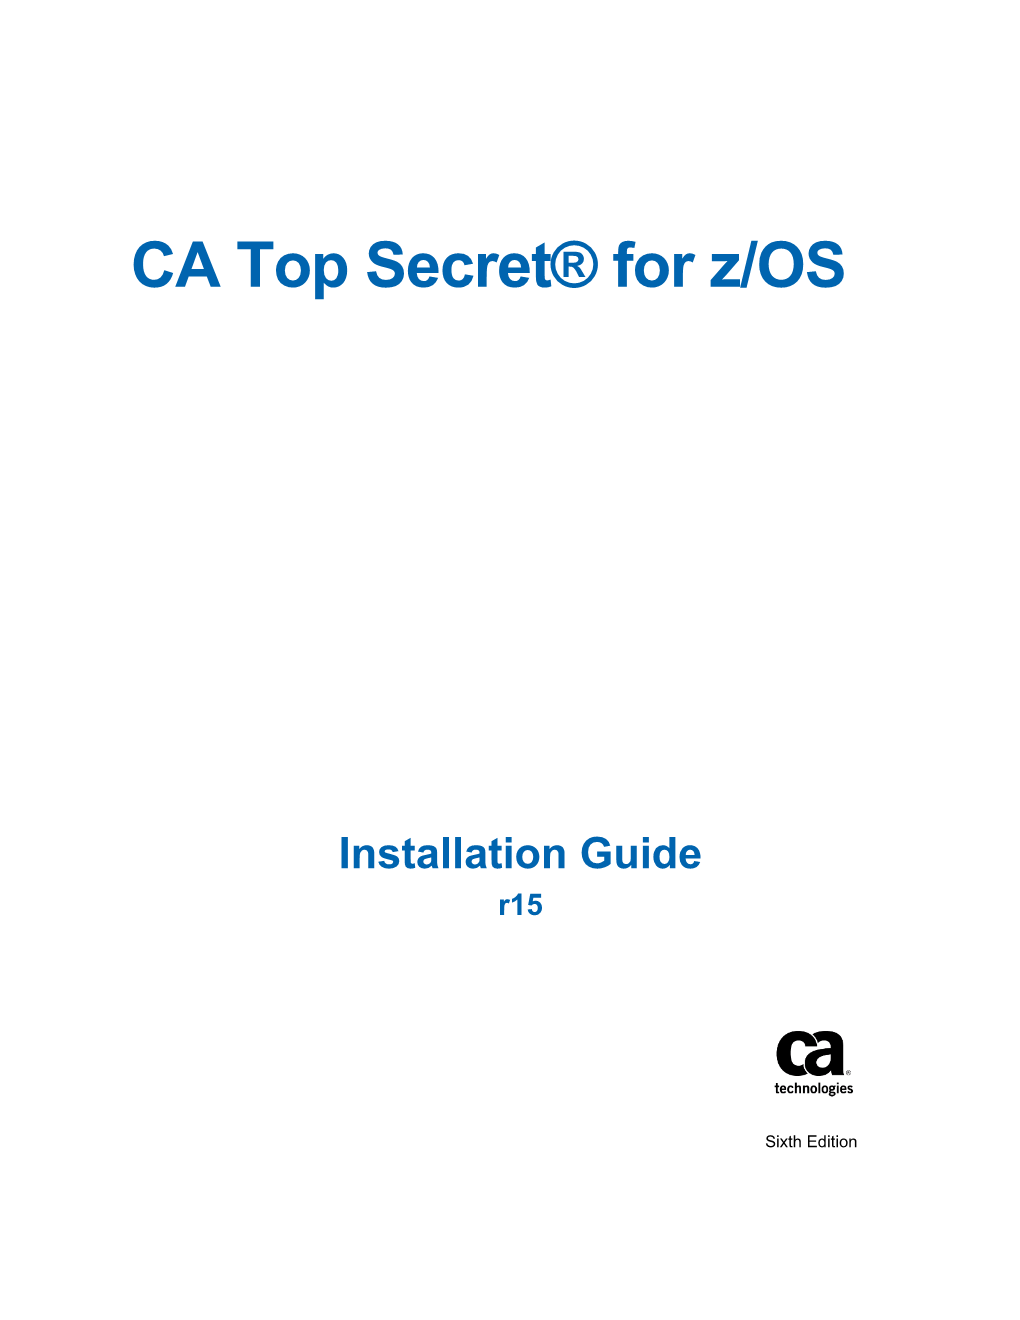 CA Top Secret for Z/OS Installation Guide